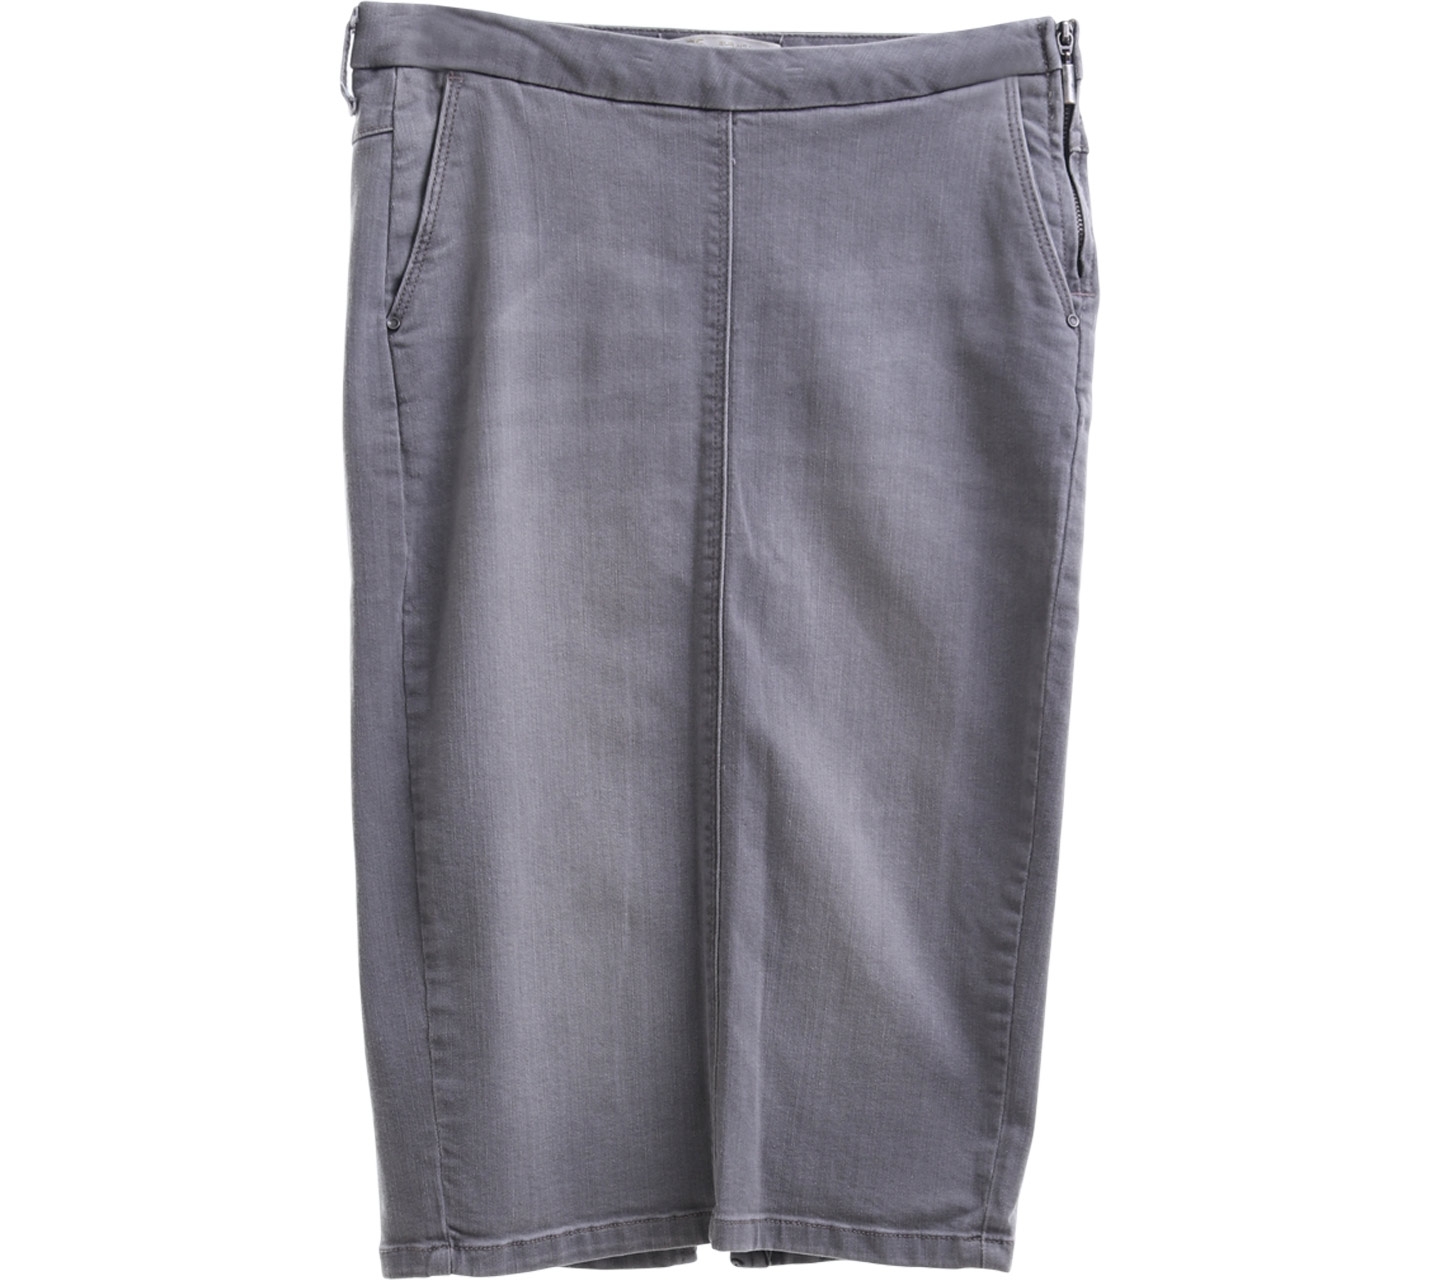 Zara Grey Denim Mini Skirt